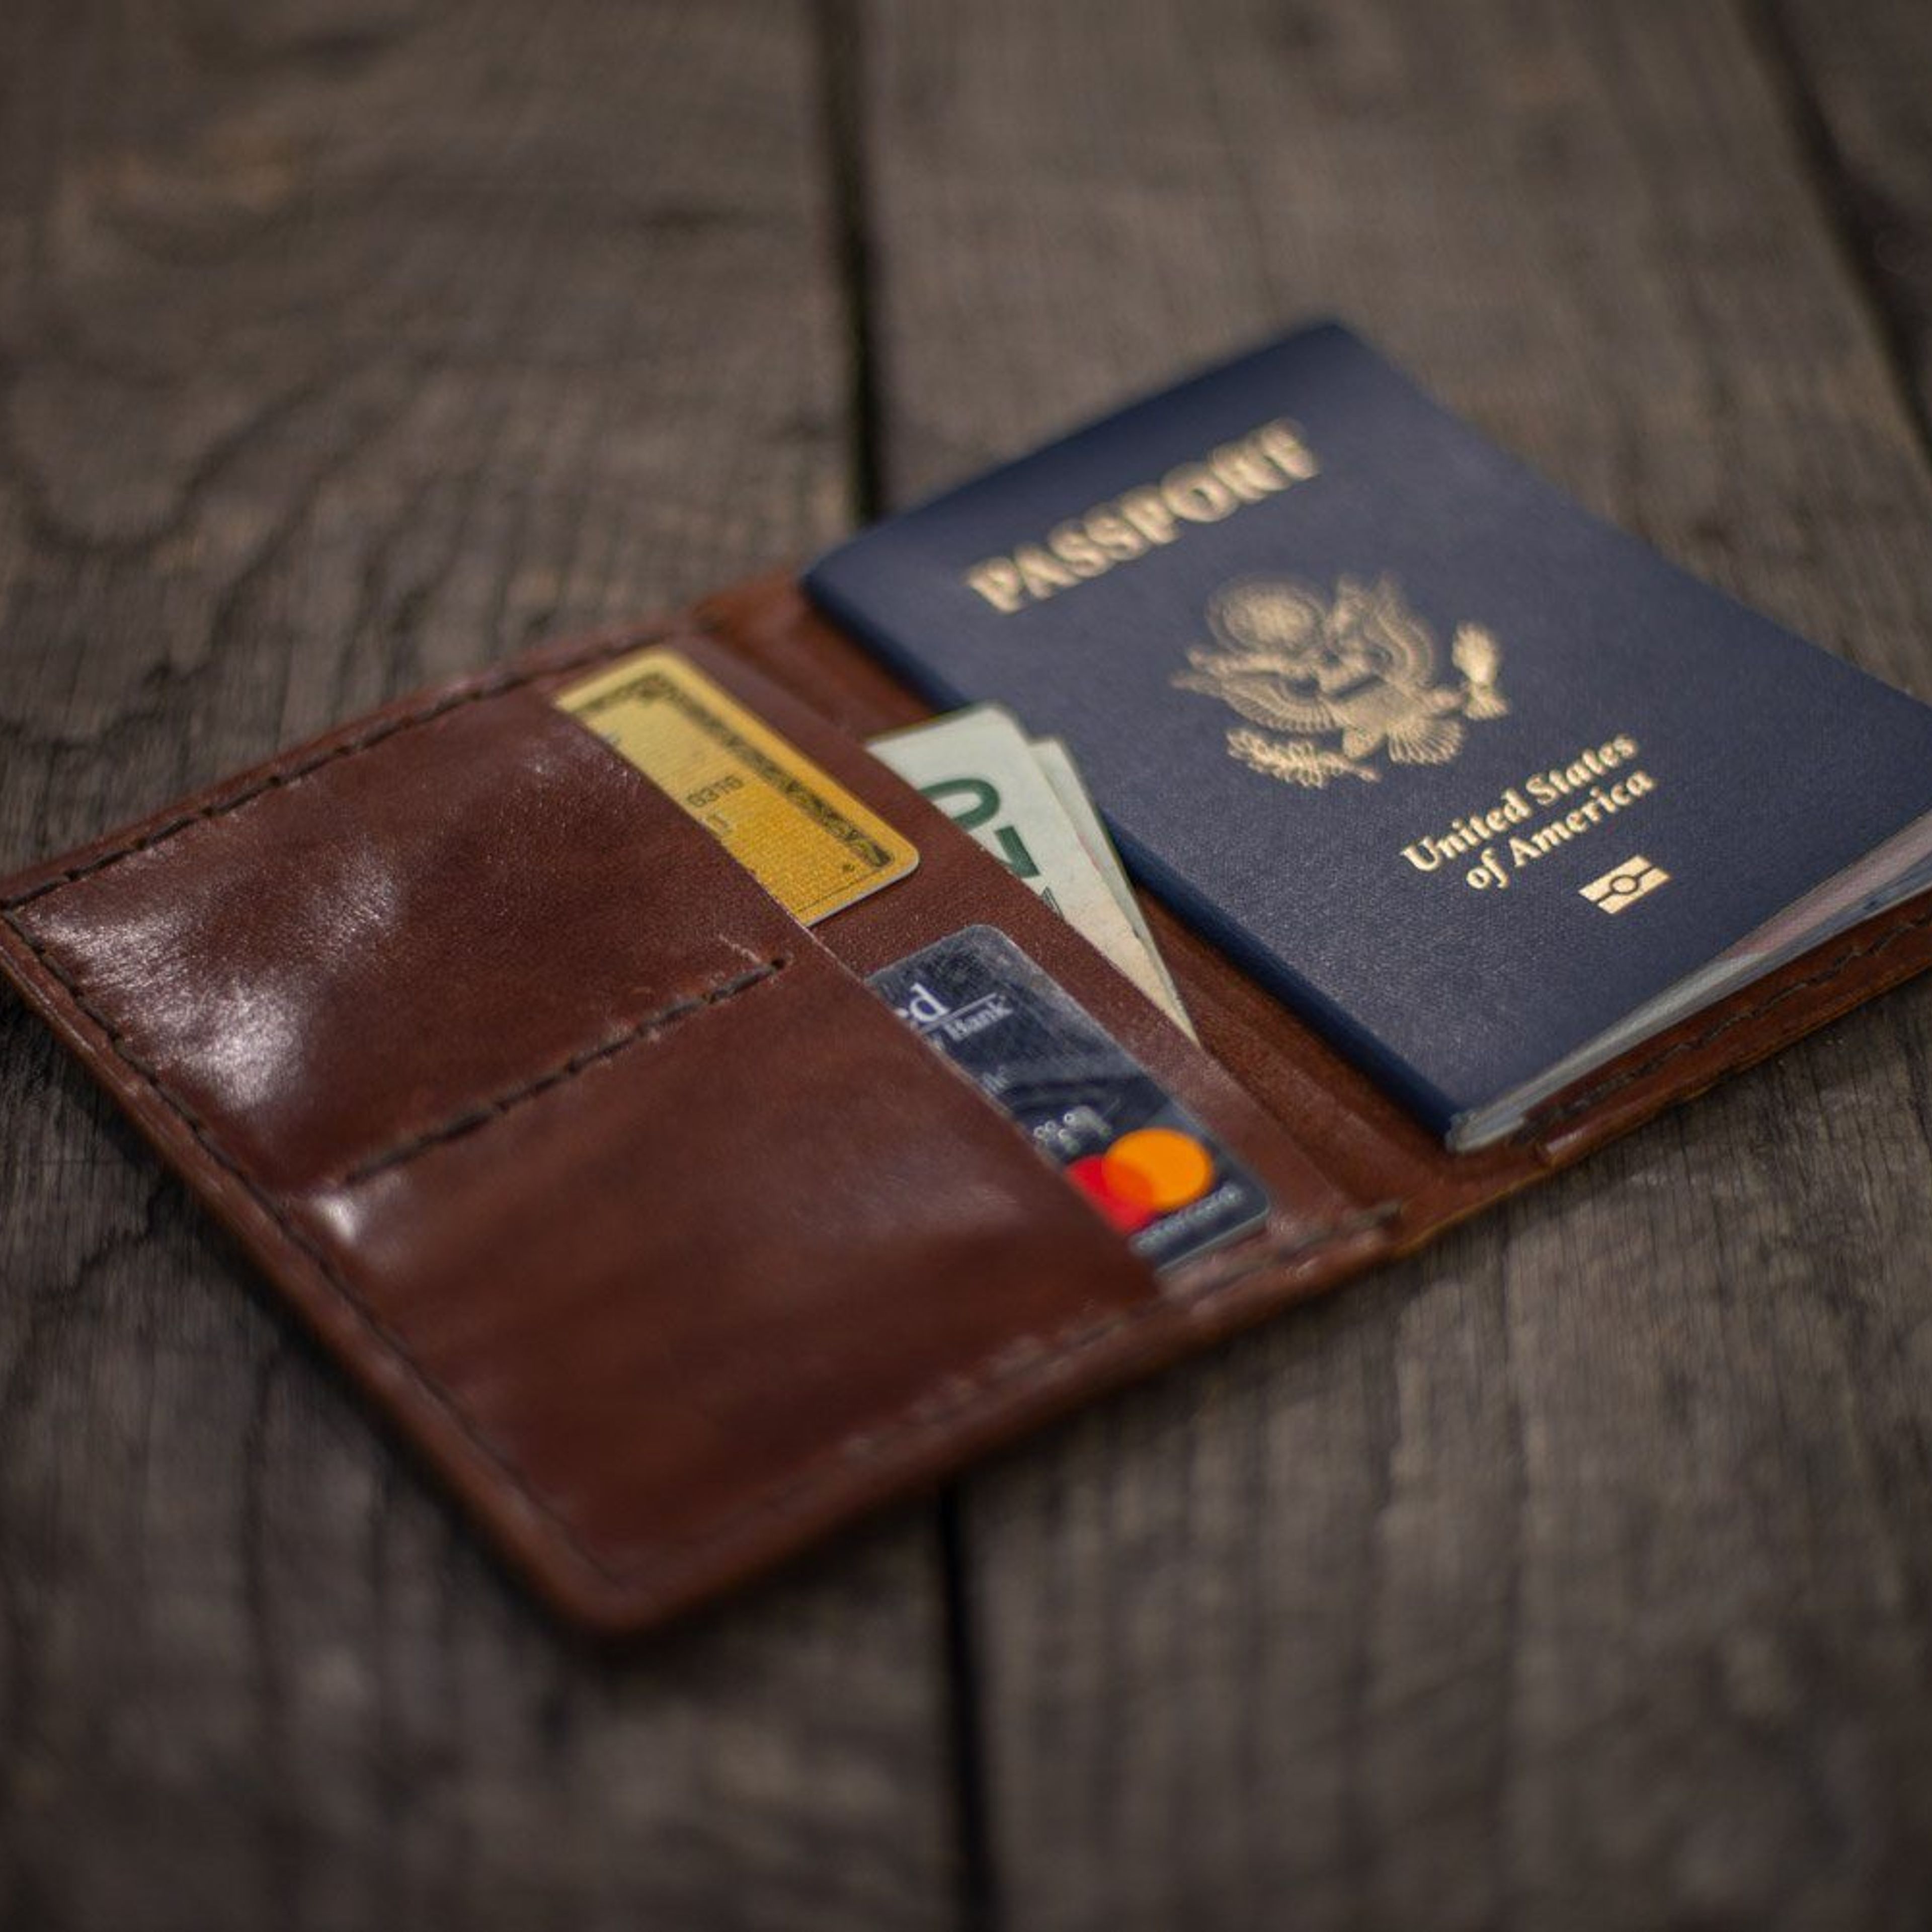 Adventure Leather Travel Passport Wallet